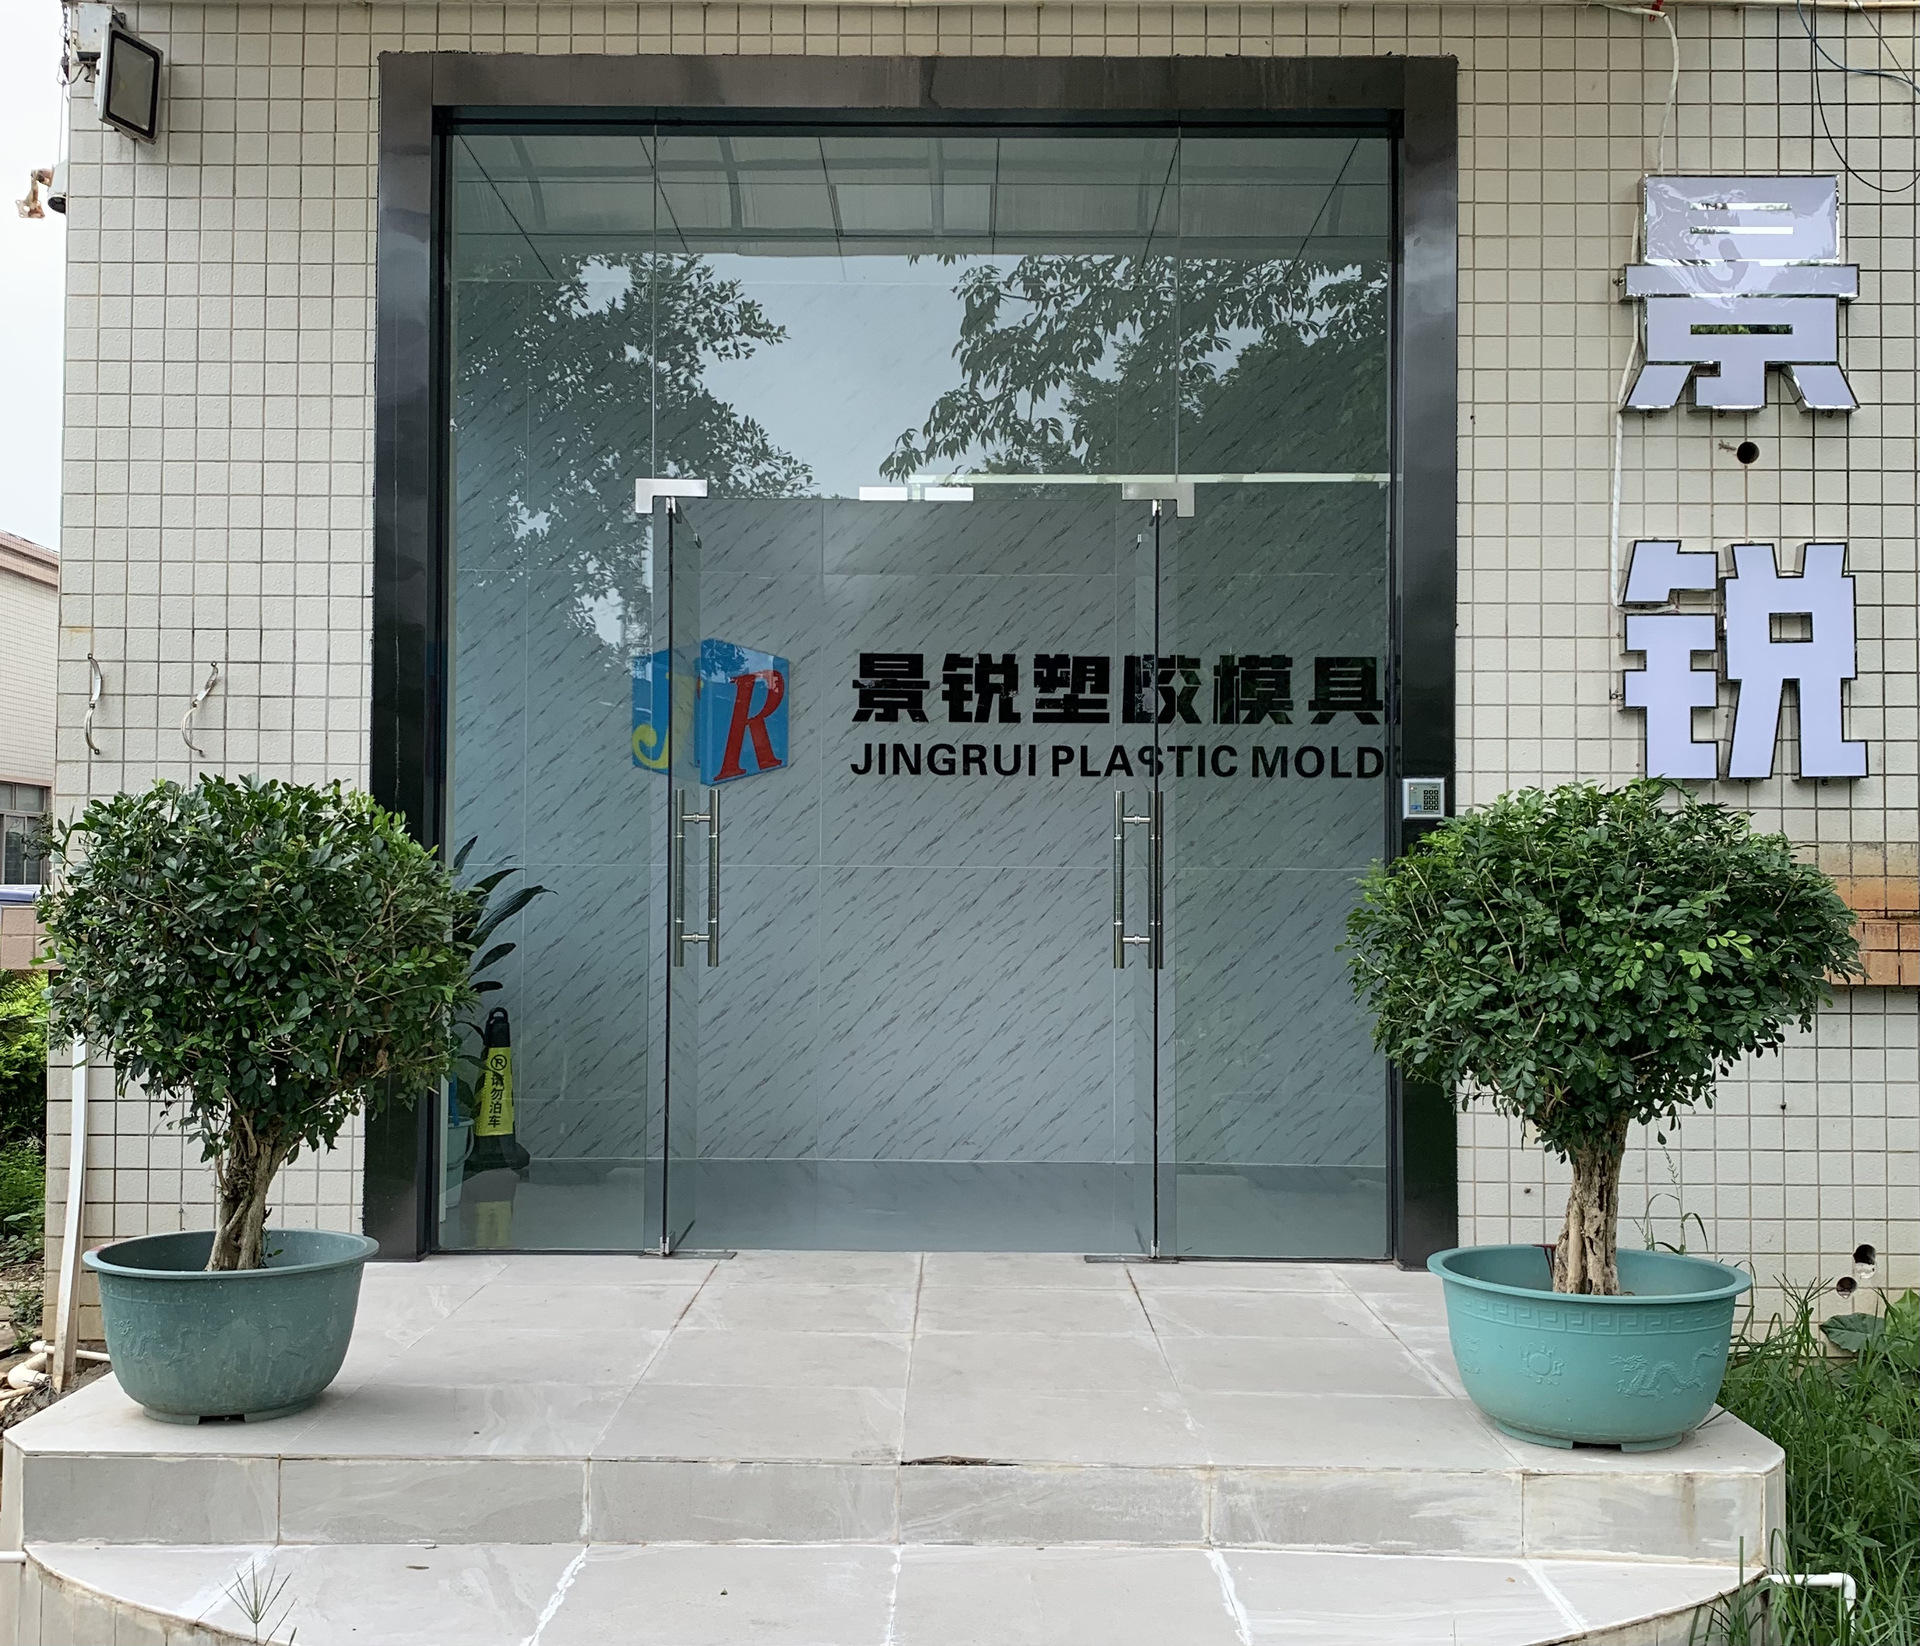   Dongguan Jingrui Plastic Mold Co., Ltd